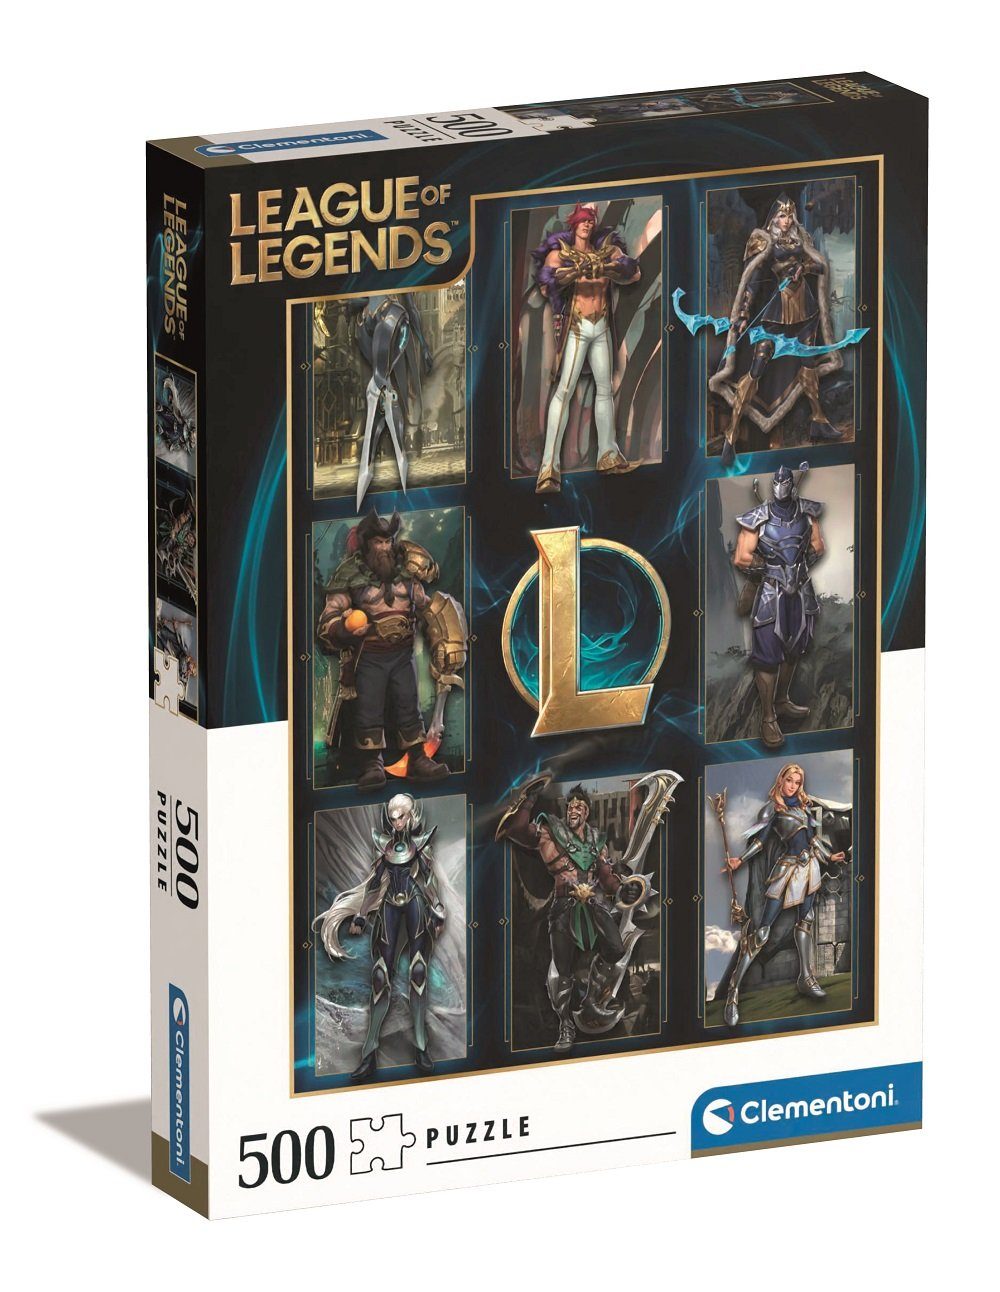 Clementoni® Puzzle League of Legends Puzzle, 500 Puzzleteile, Made in Europe